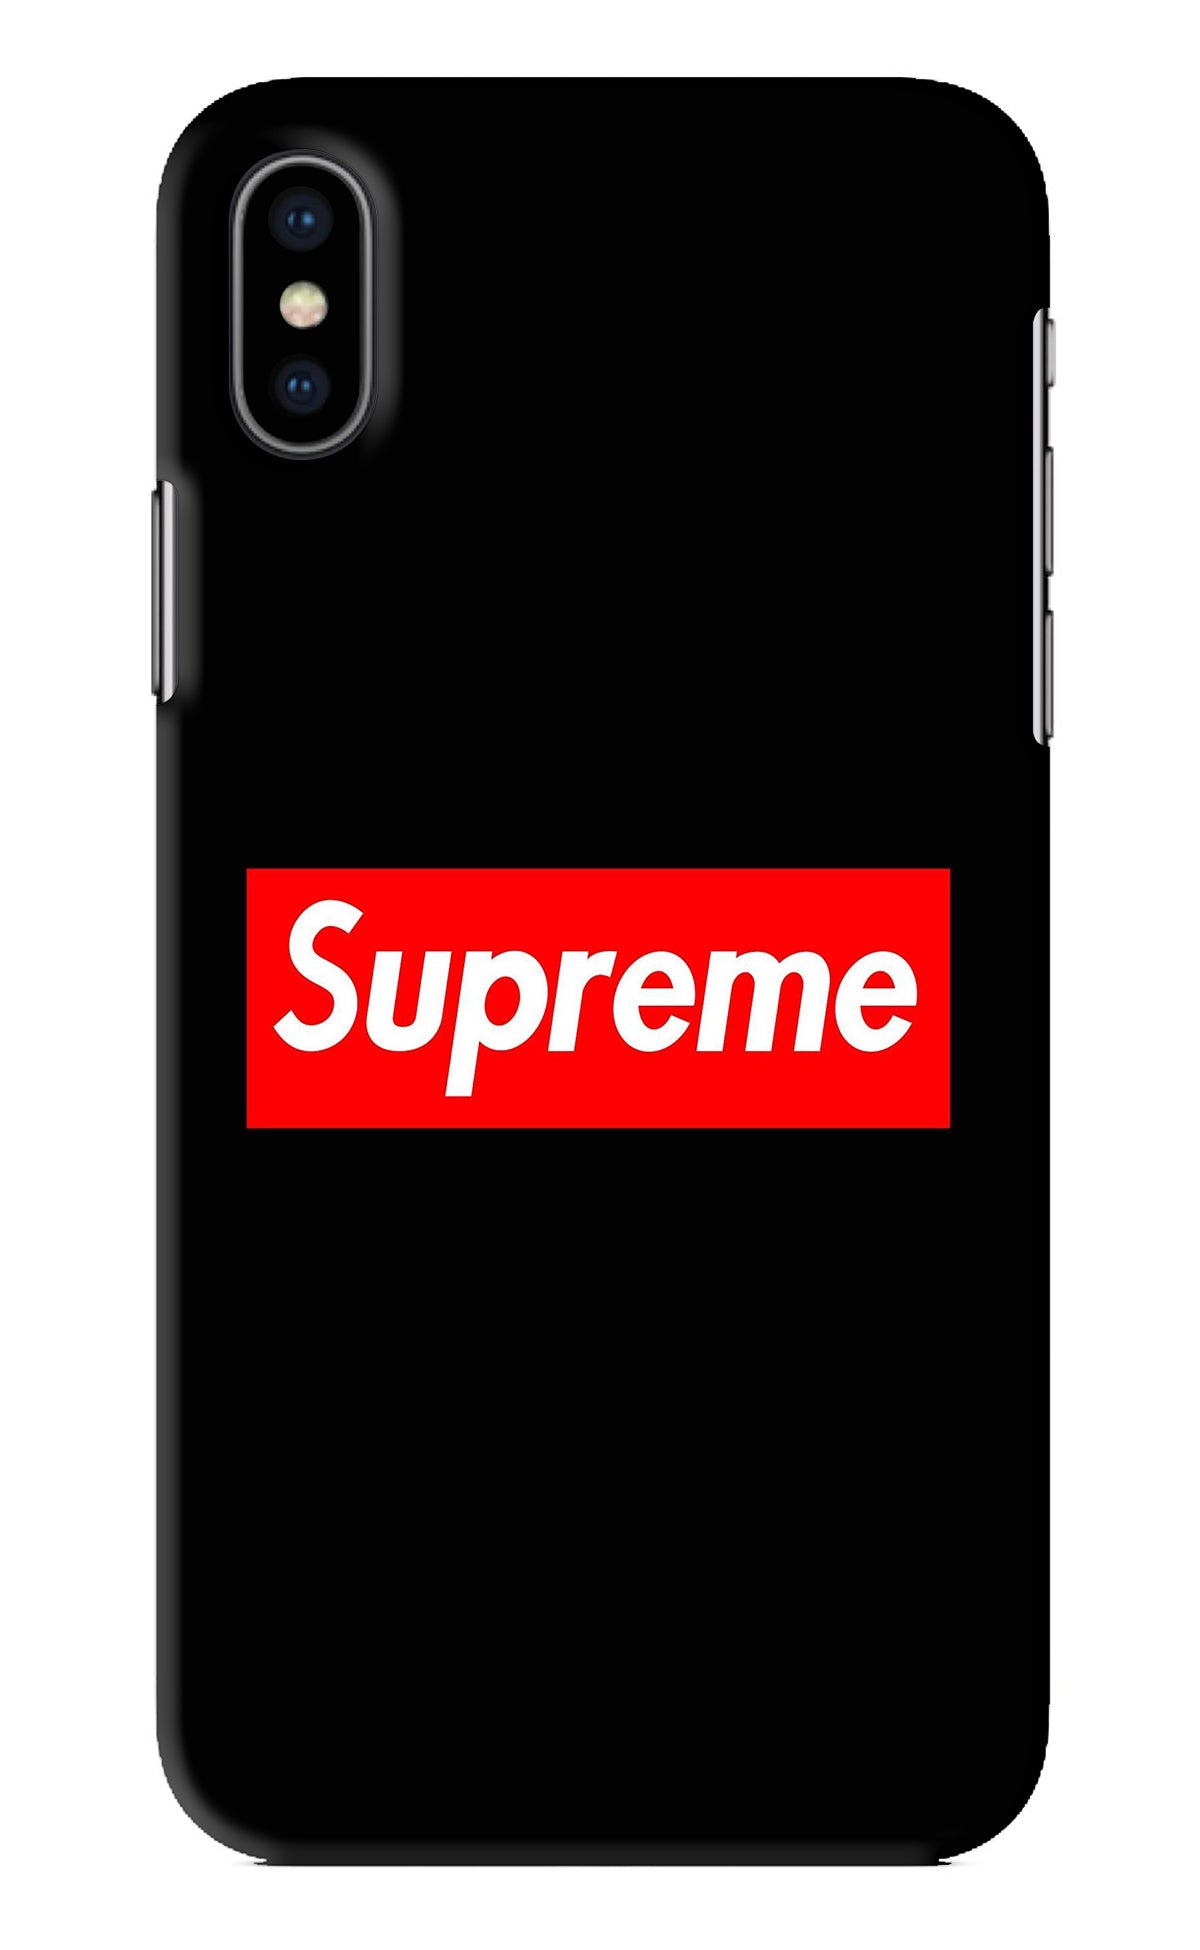 Supreme iPhone X Back Skin Wrap